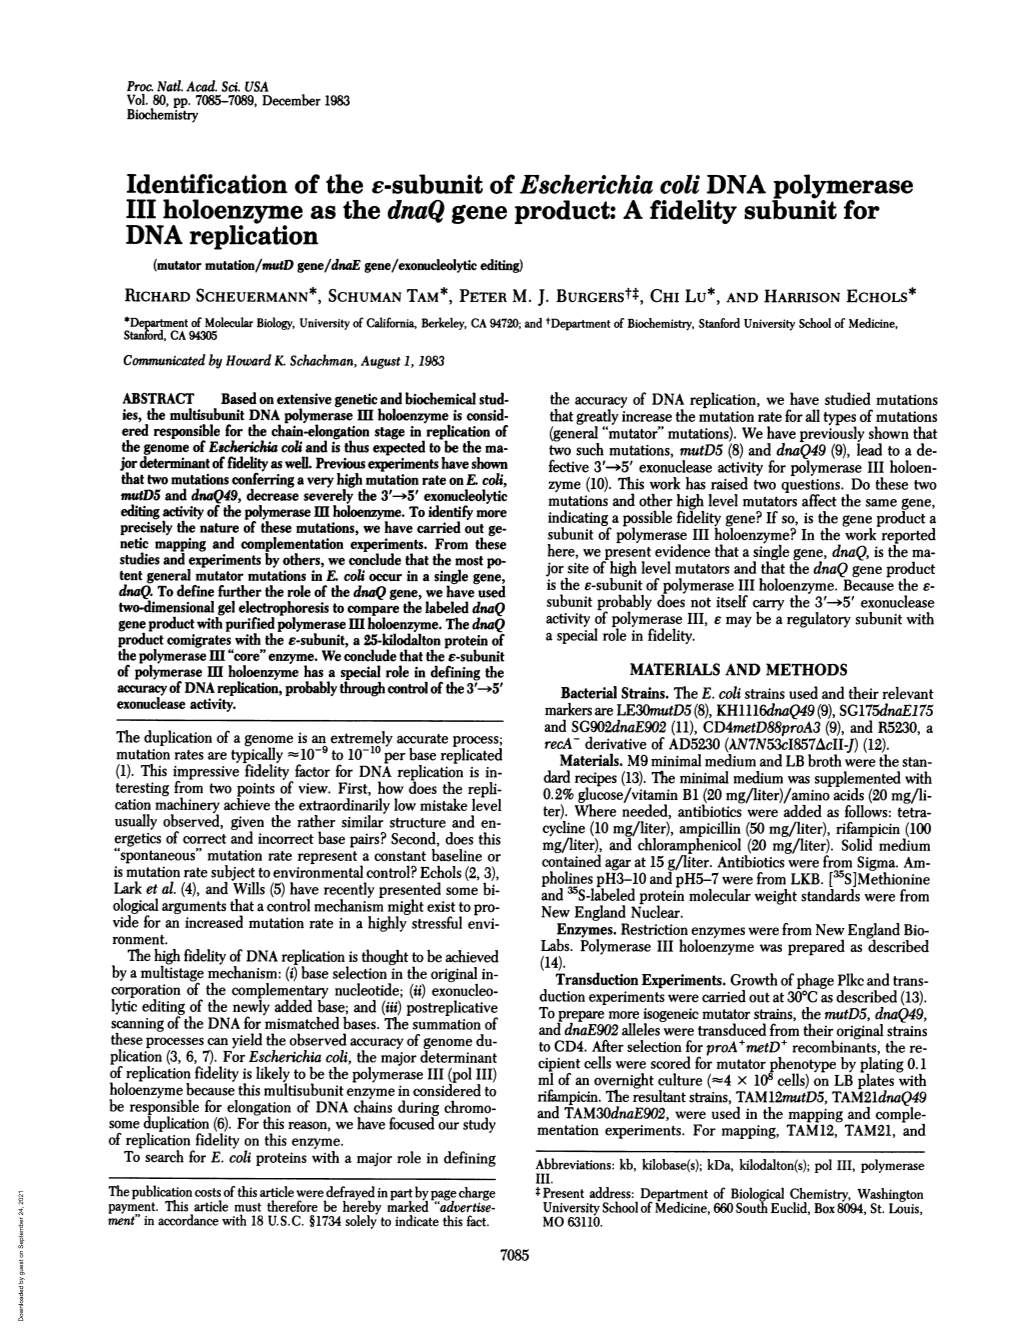 Identification of the E-Subunit of Escherichia Coli DNA Polymerase